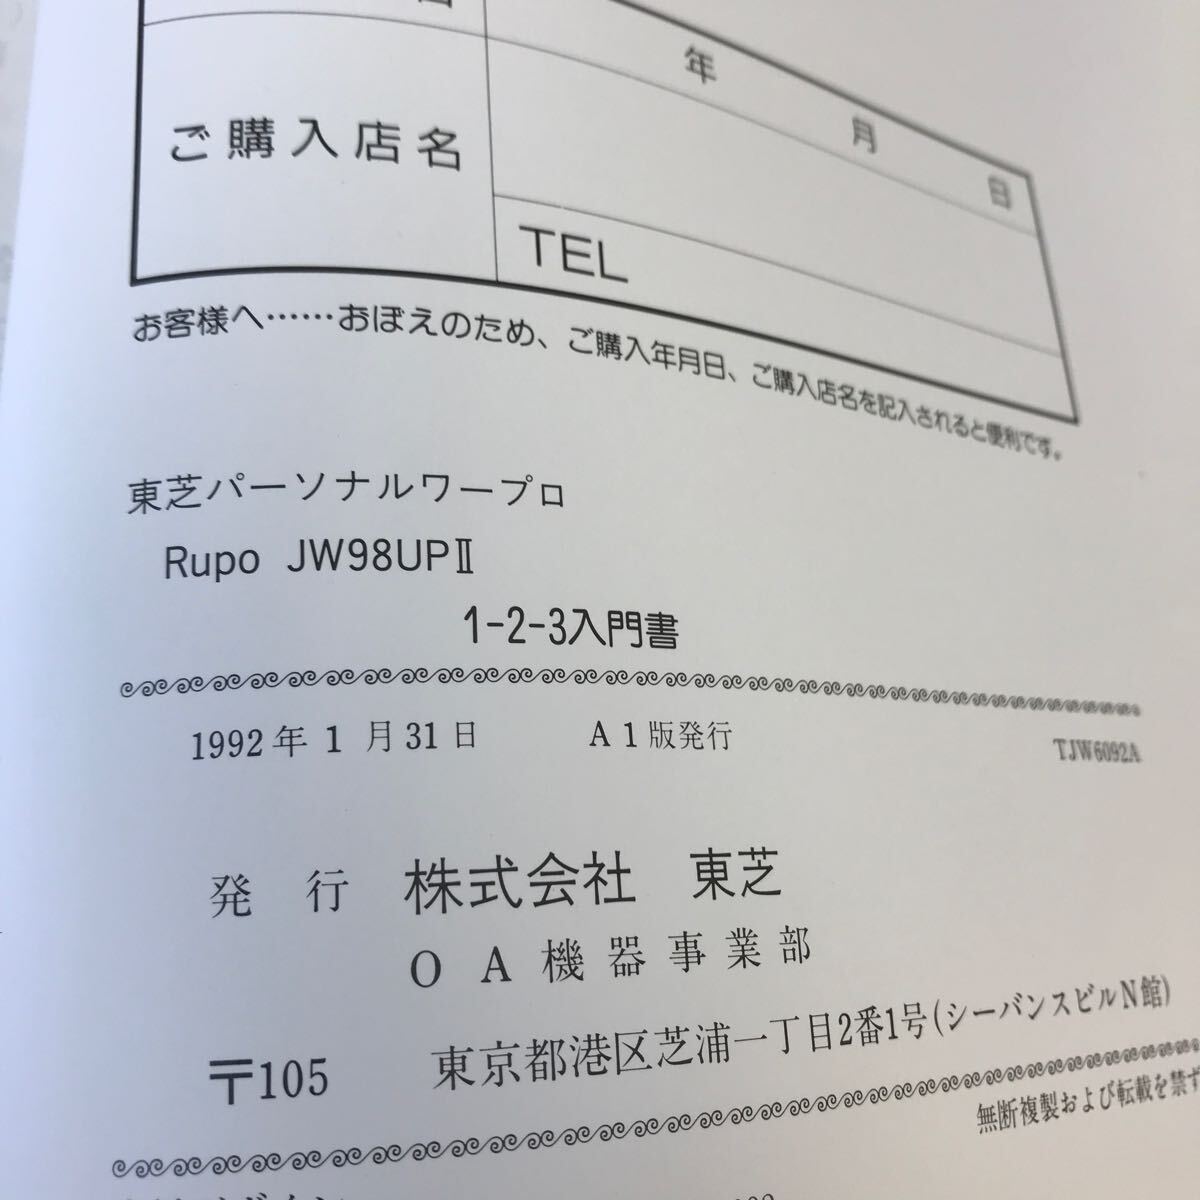 C61-167 Toshiba personal текстовой процессор Lupo JW98UPⅡ инструкция. 